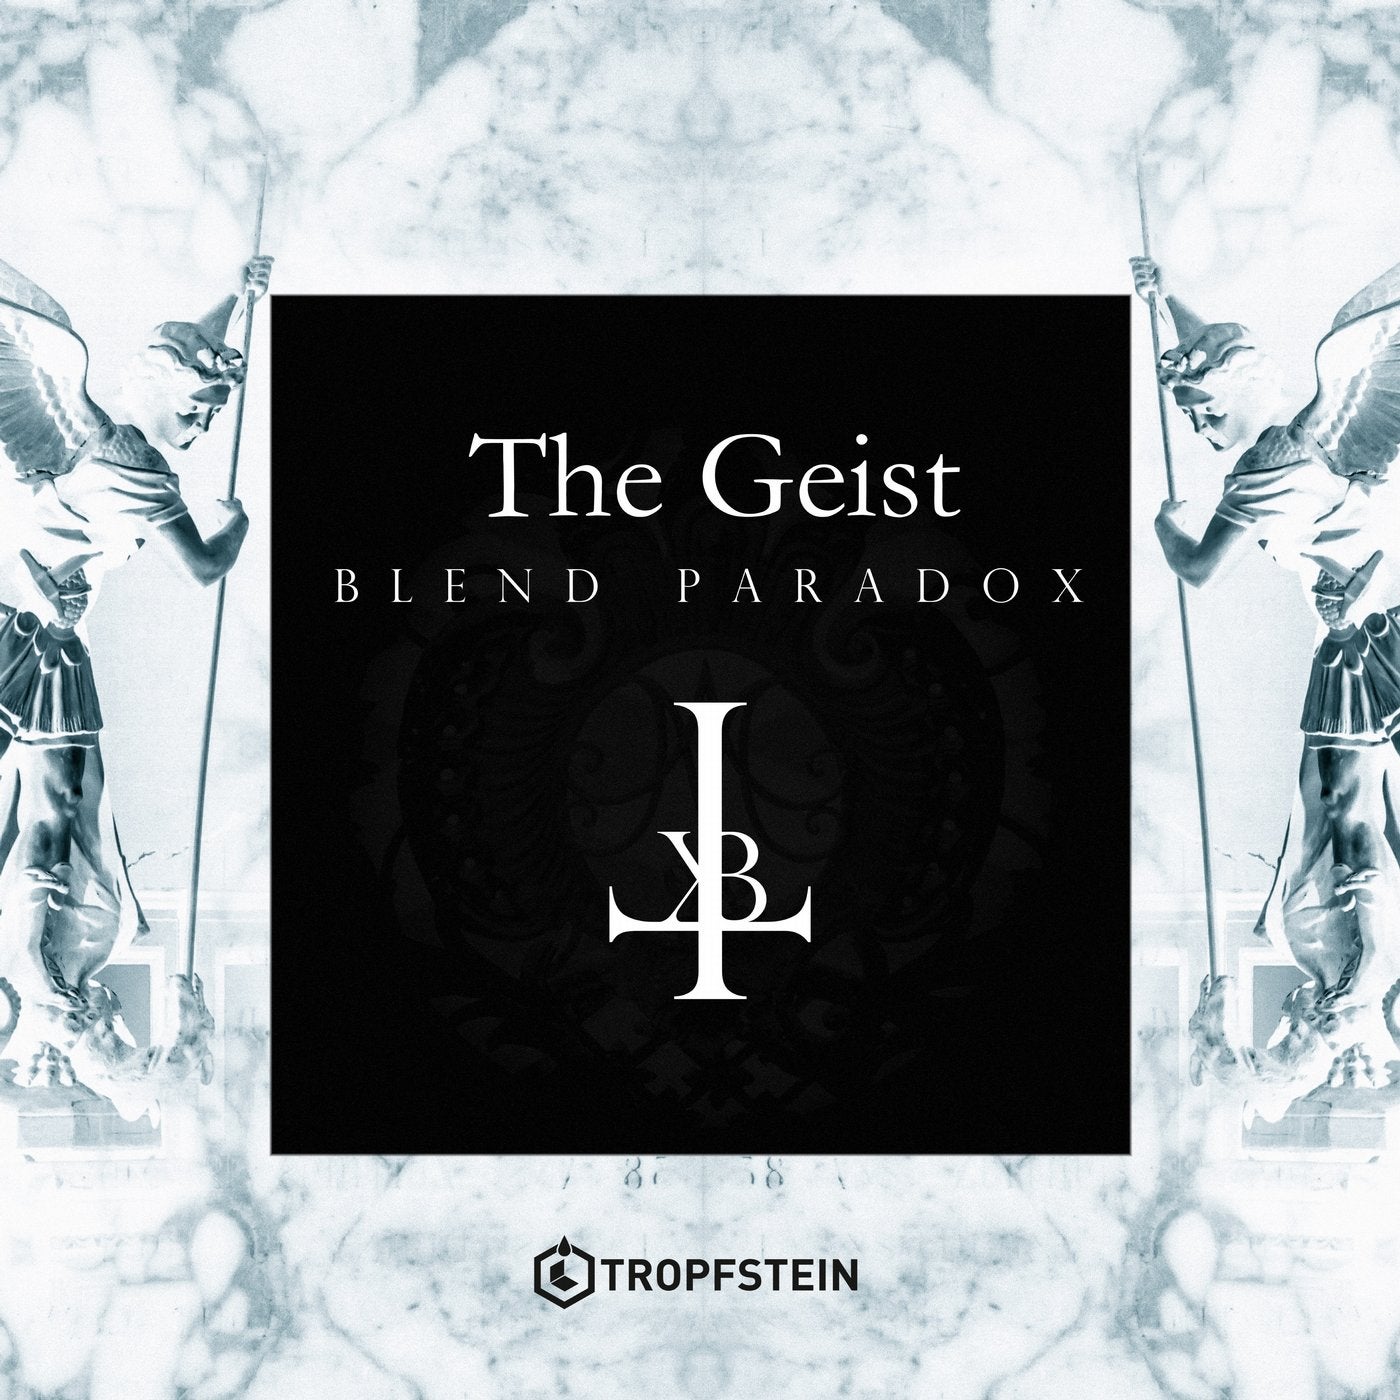 The Geist